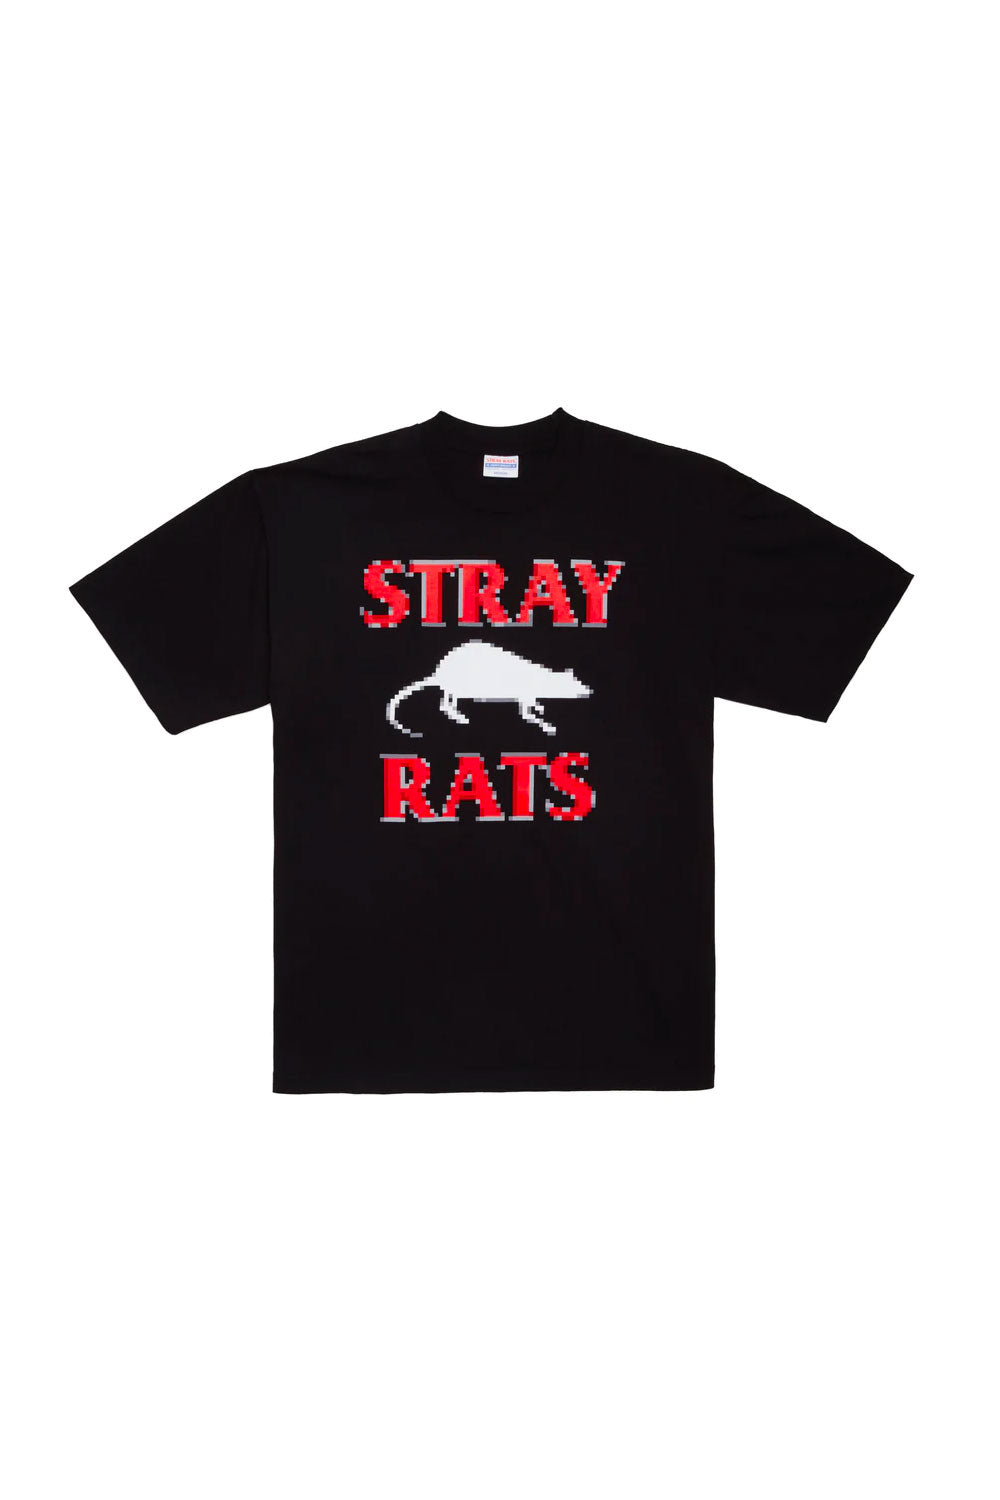 stray rats t shirt black